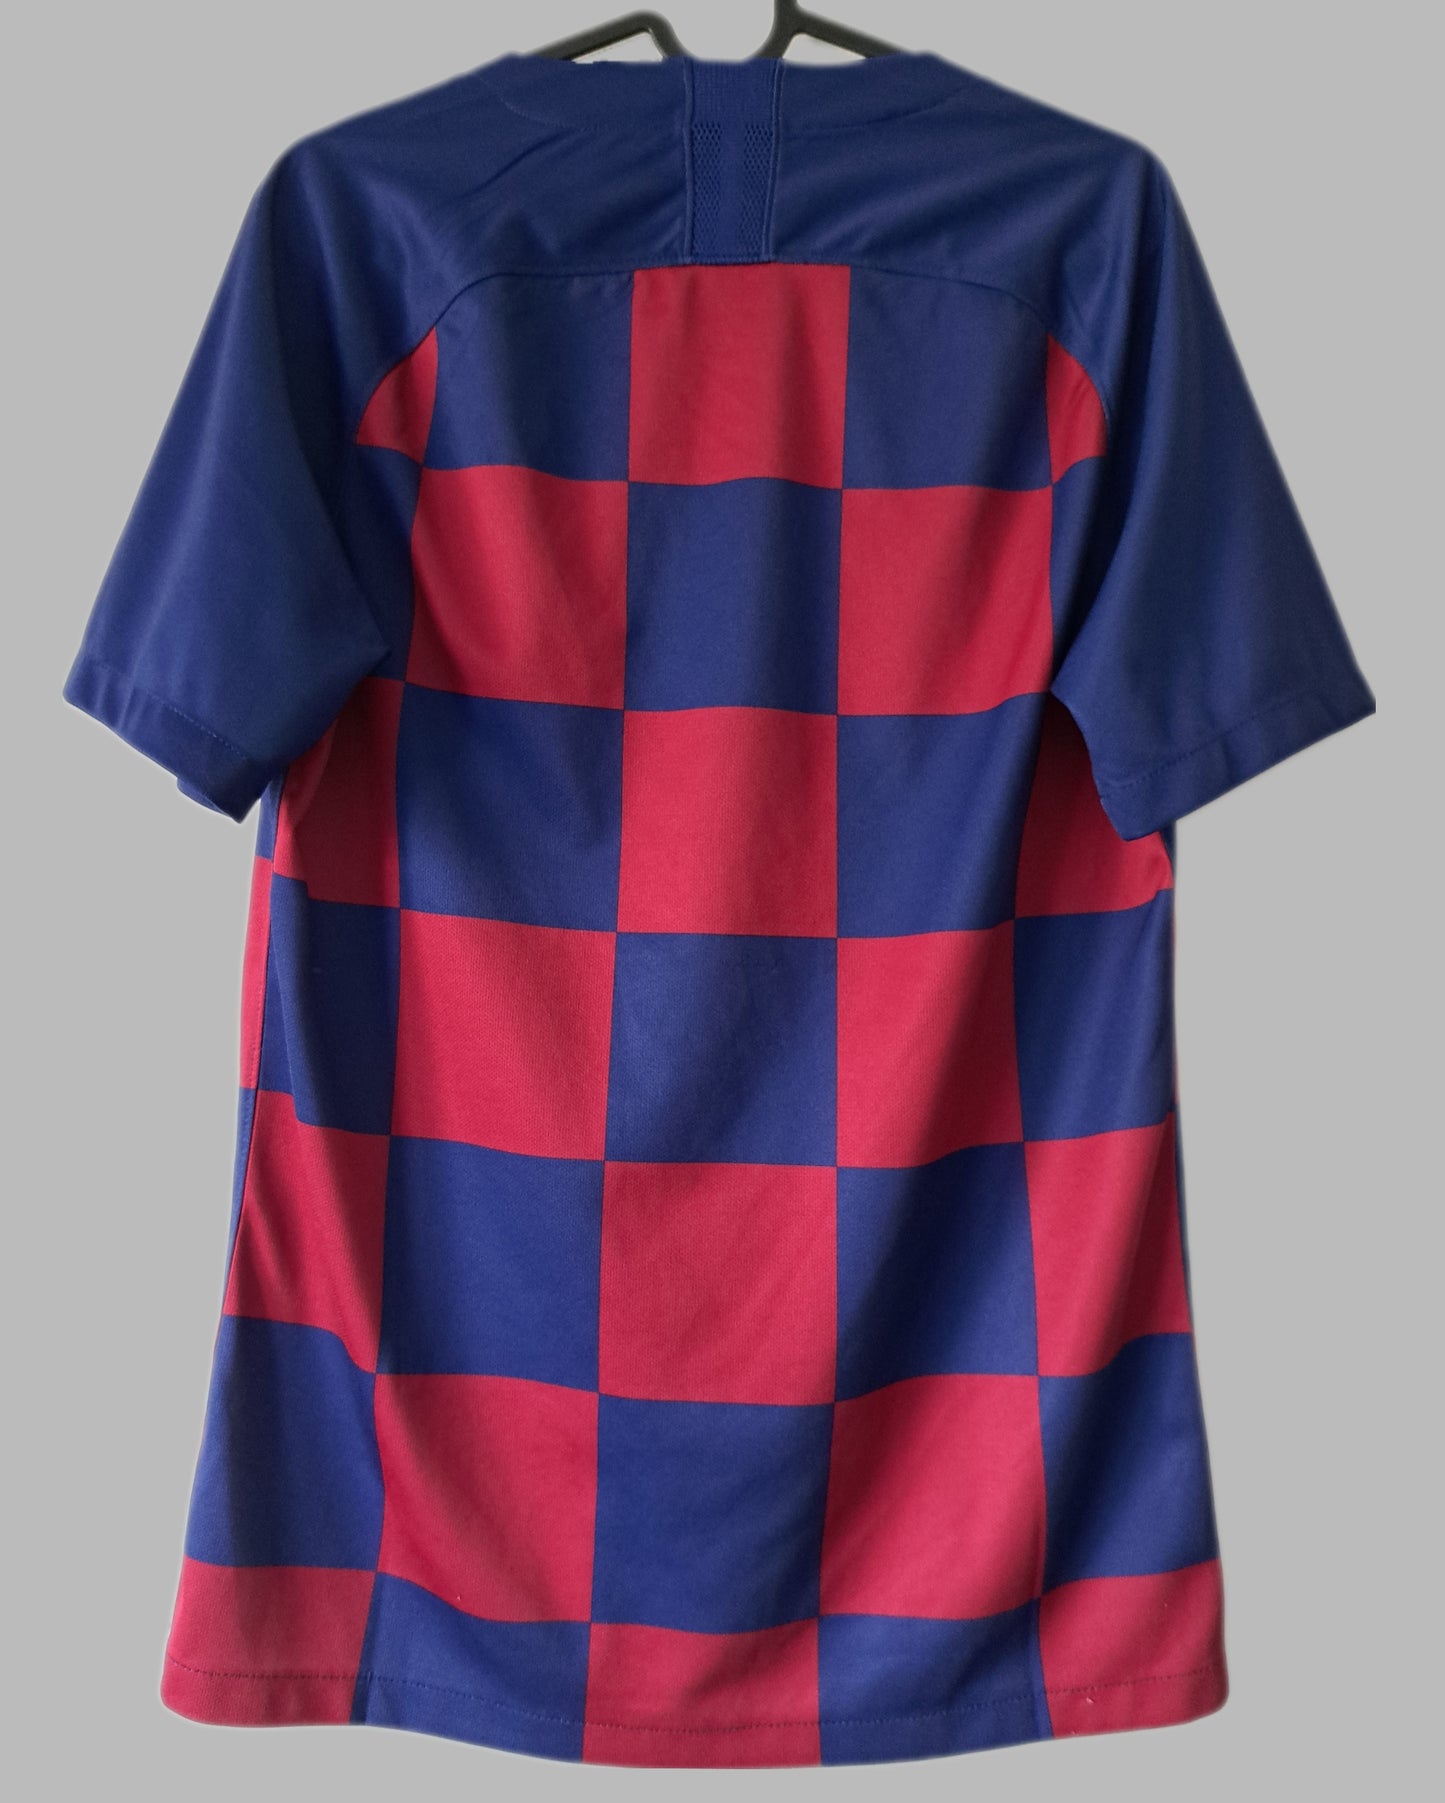 FC Barcelona 2019-20 Home Shirt